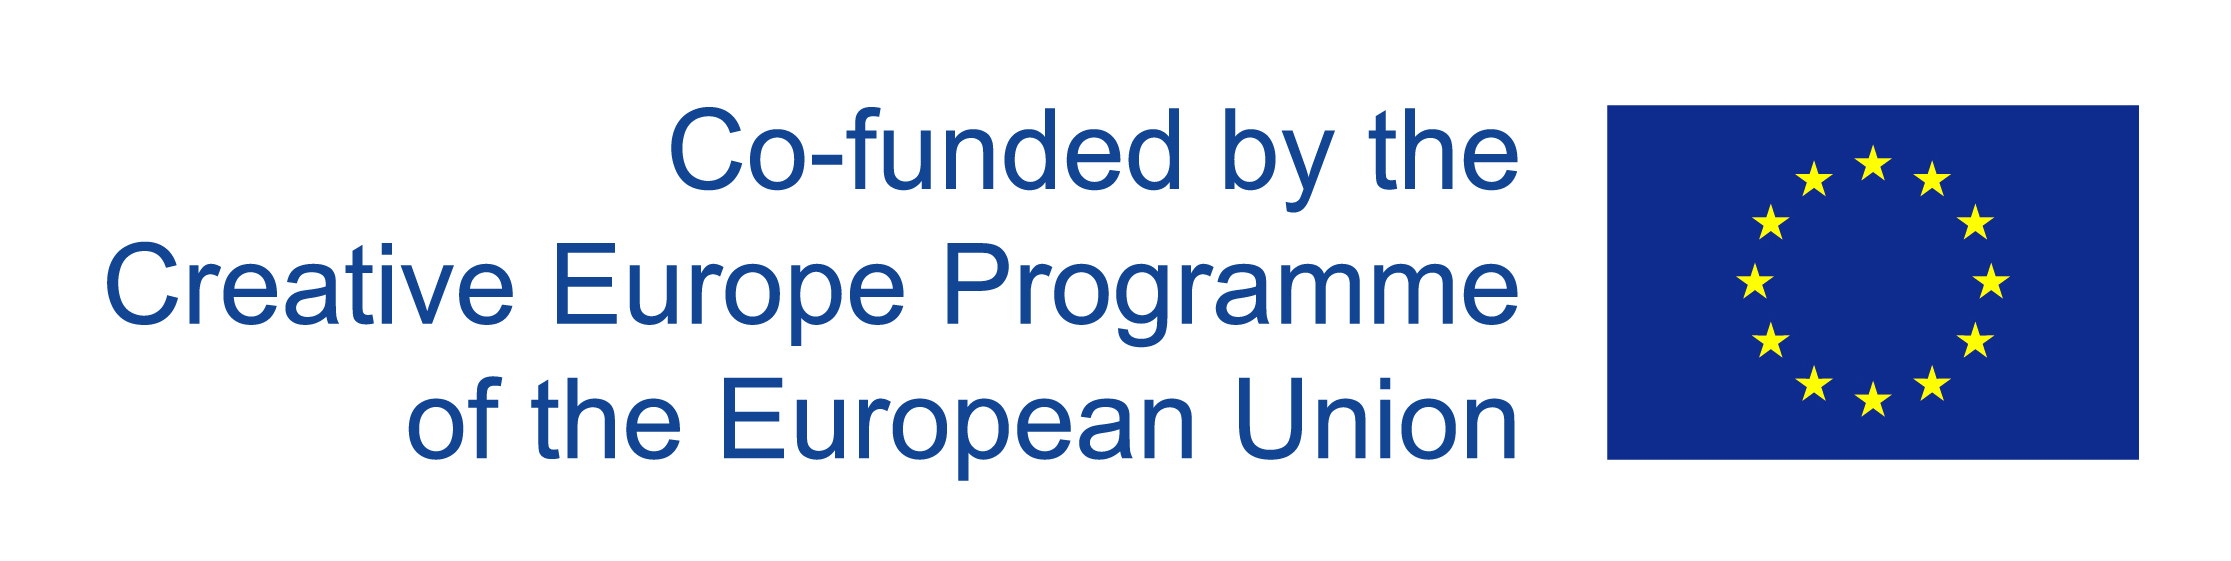 eu_flag_creative_europe_co_funded_pos_[rgb]_left.jpg